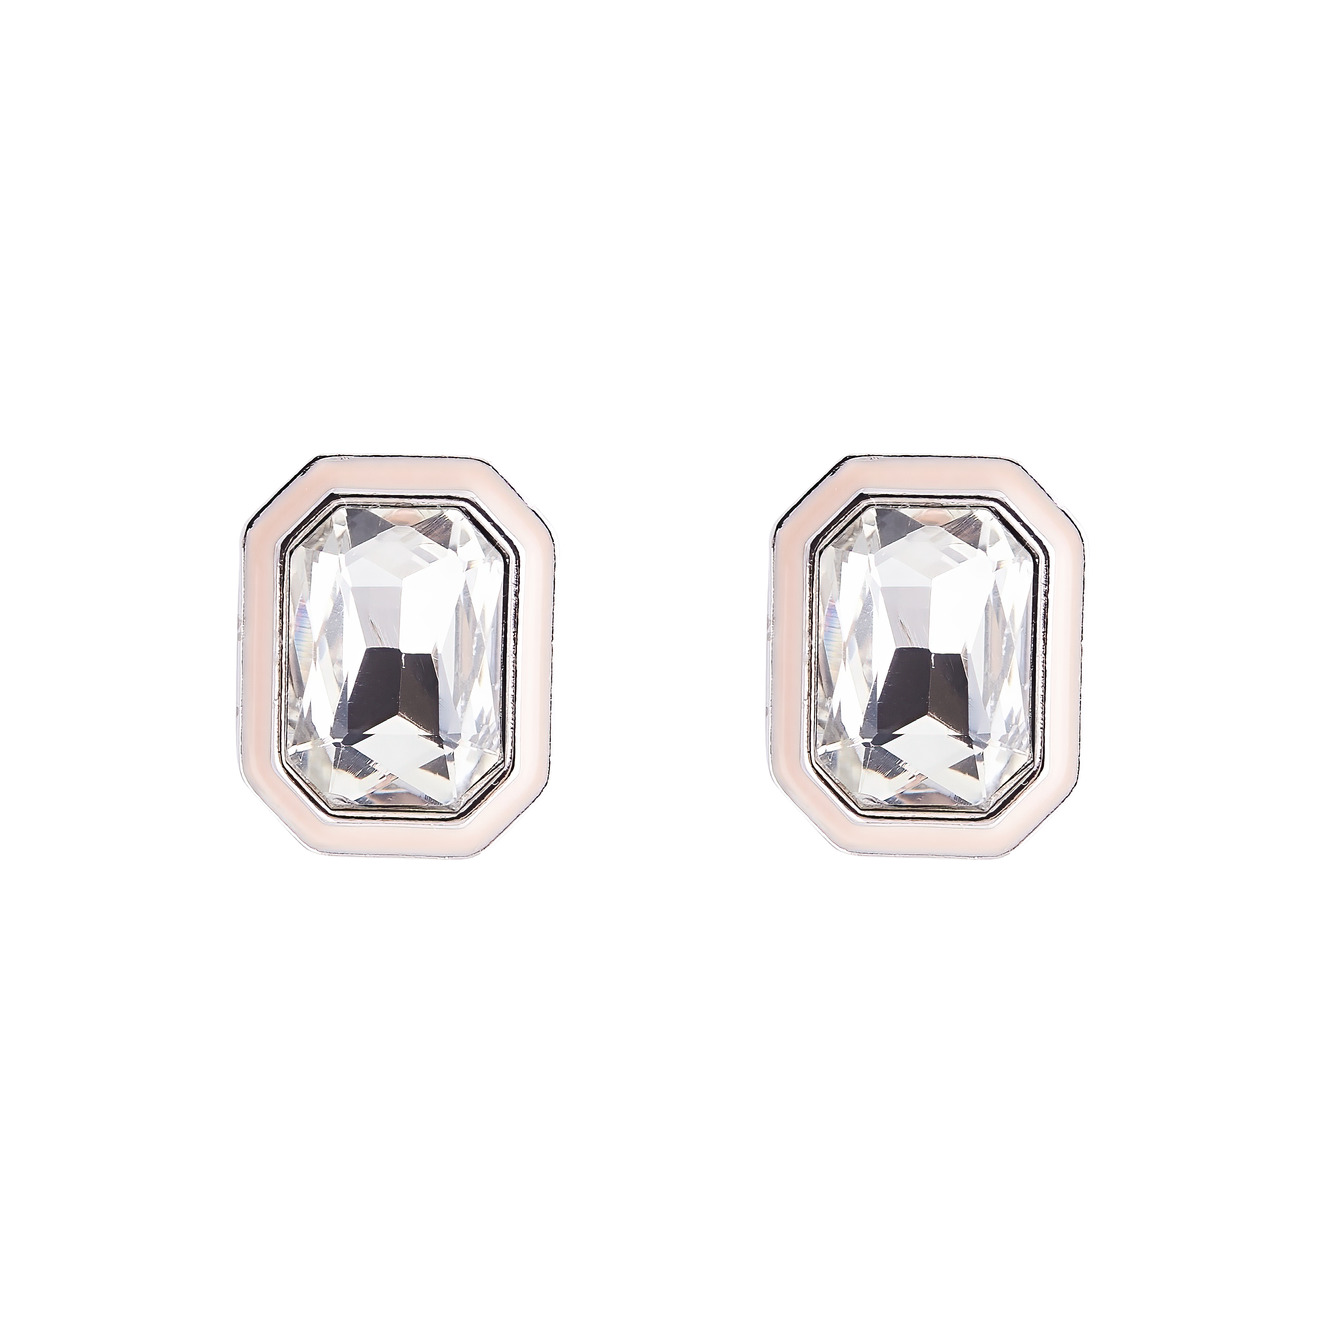 Herald Percy Серебристые серьги с белыми кристаллами и розовой эмалью herald percy серебристые серьги звезды с кристаллами и белыми бусинами